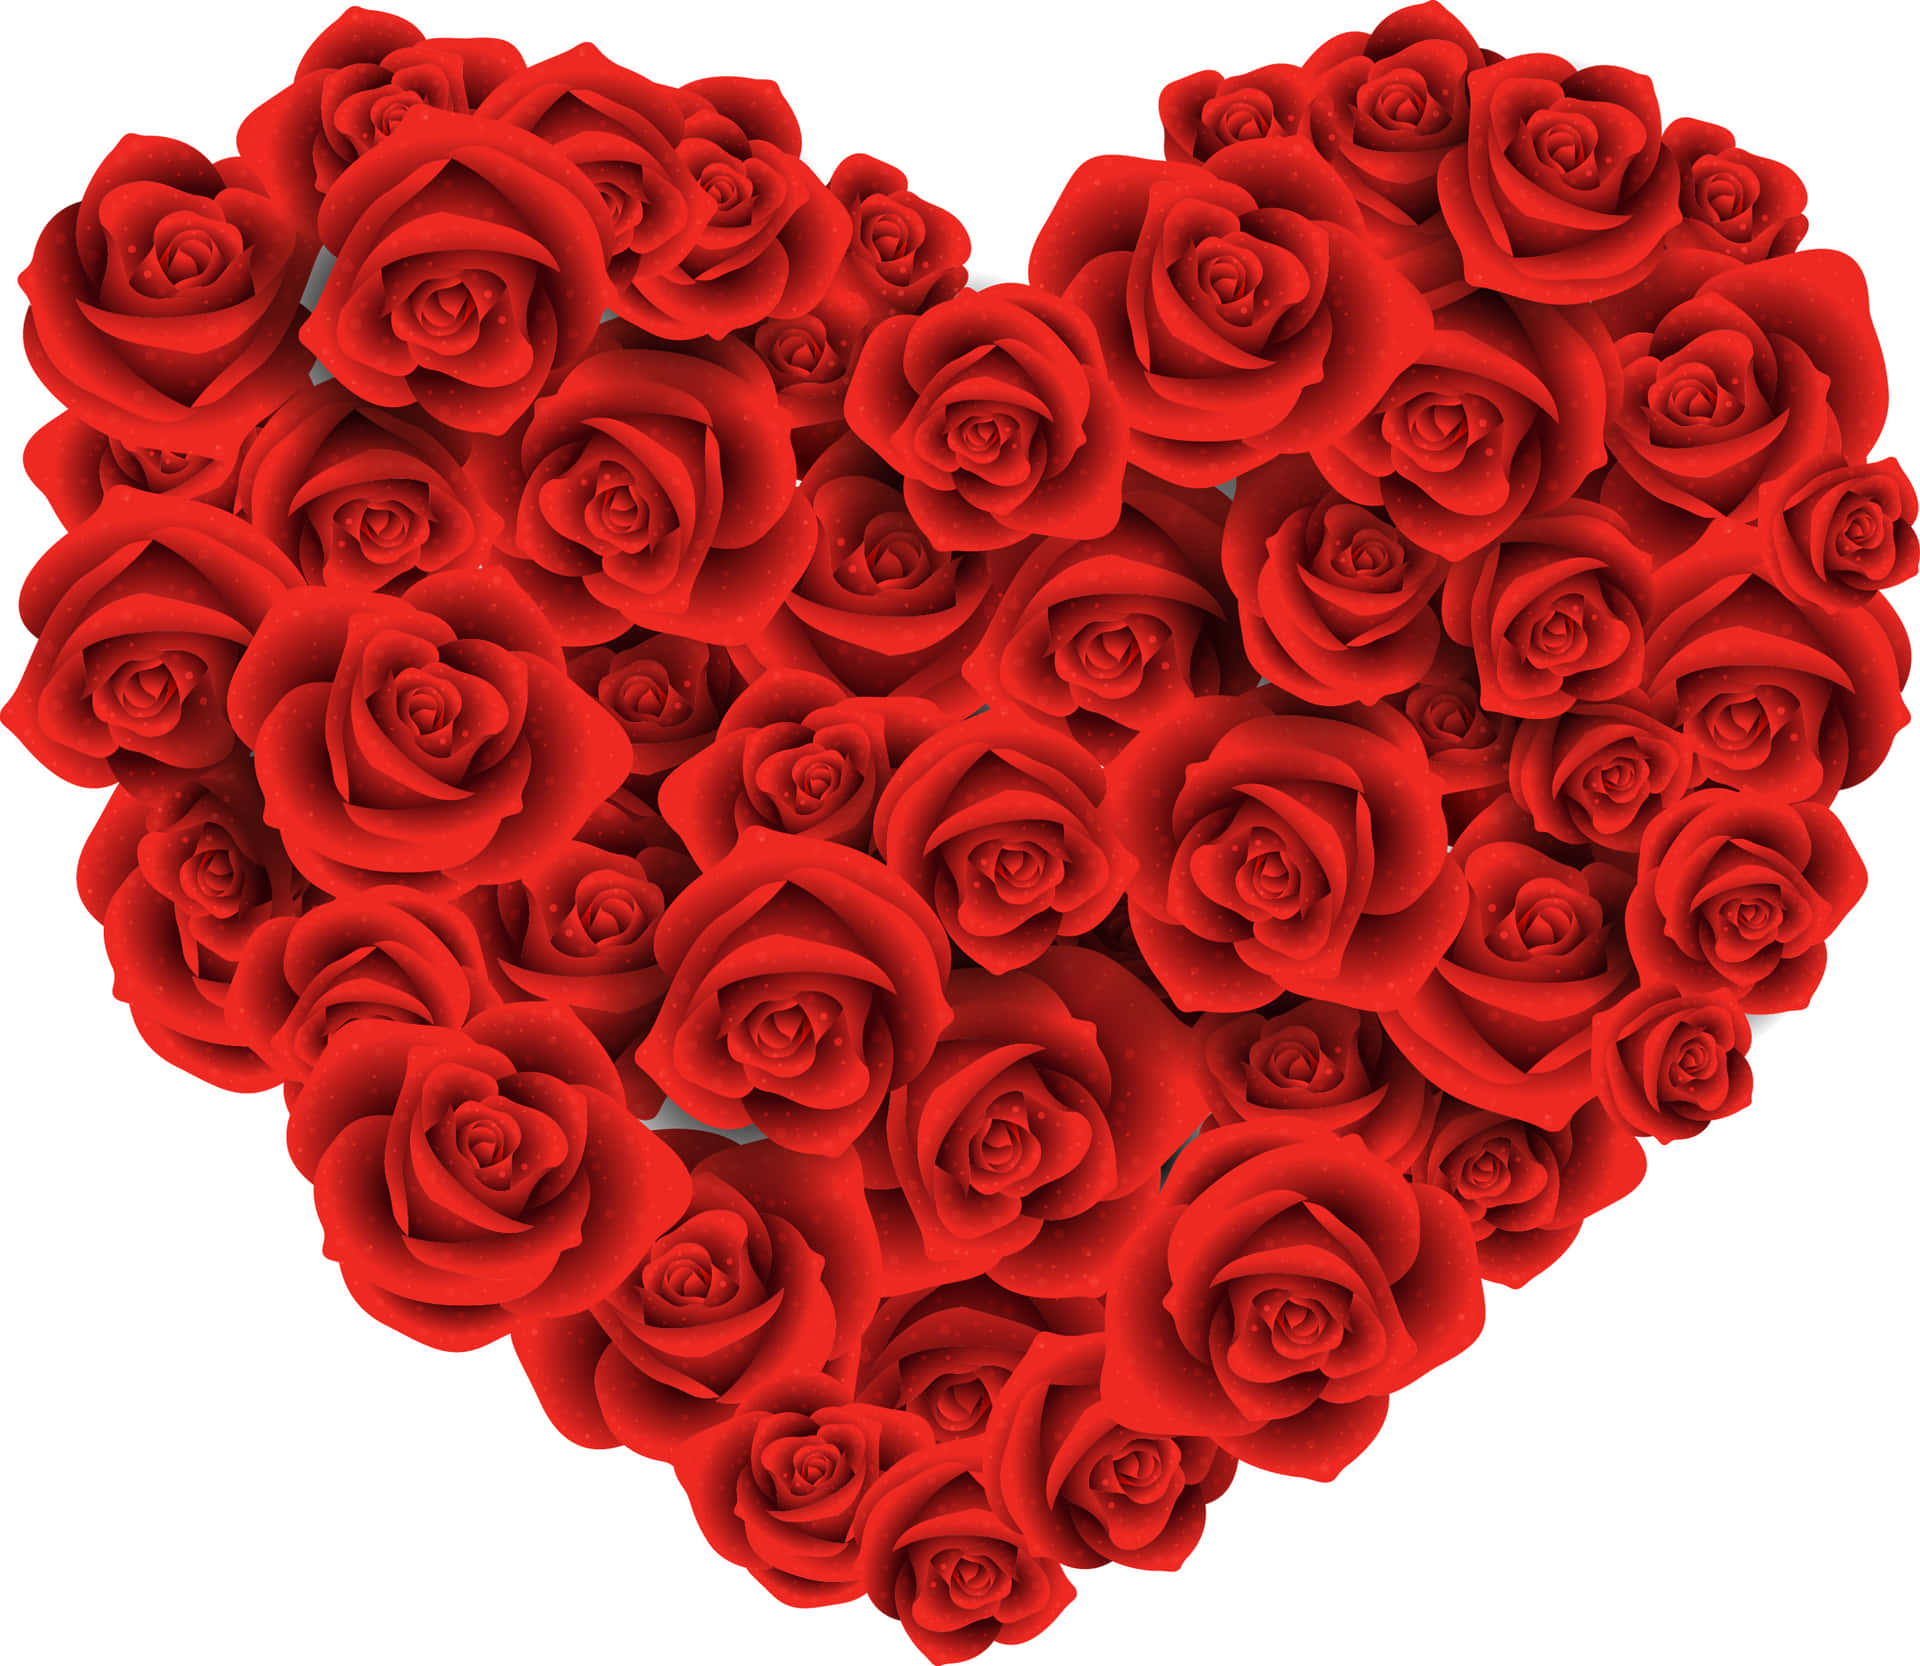 Romantic Rose Heart Arrangement Wallpaper